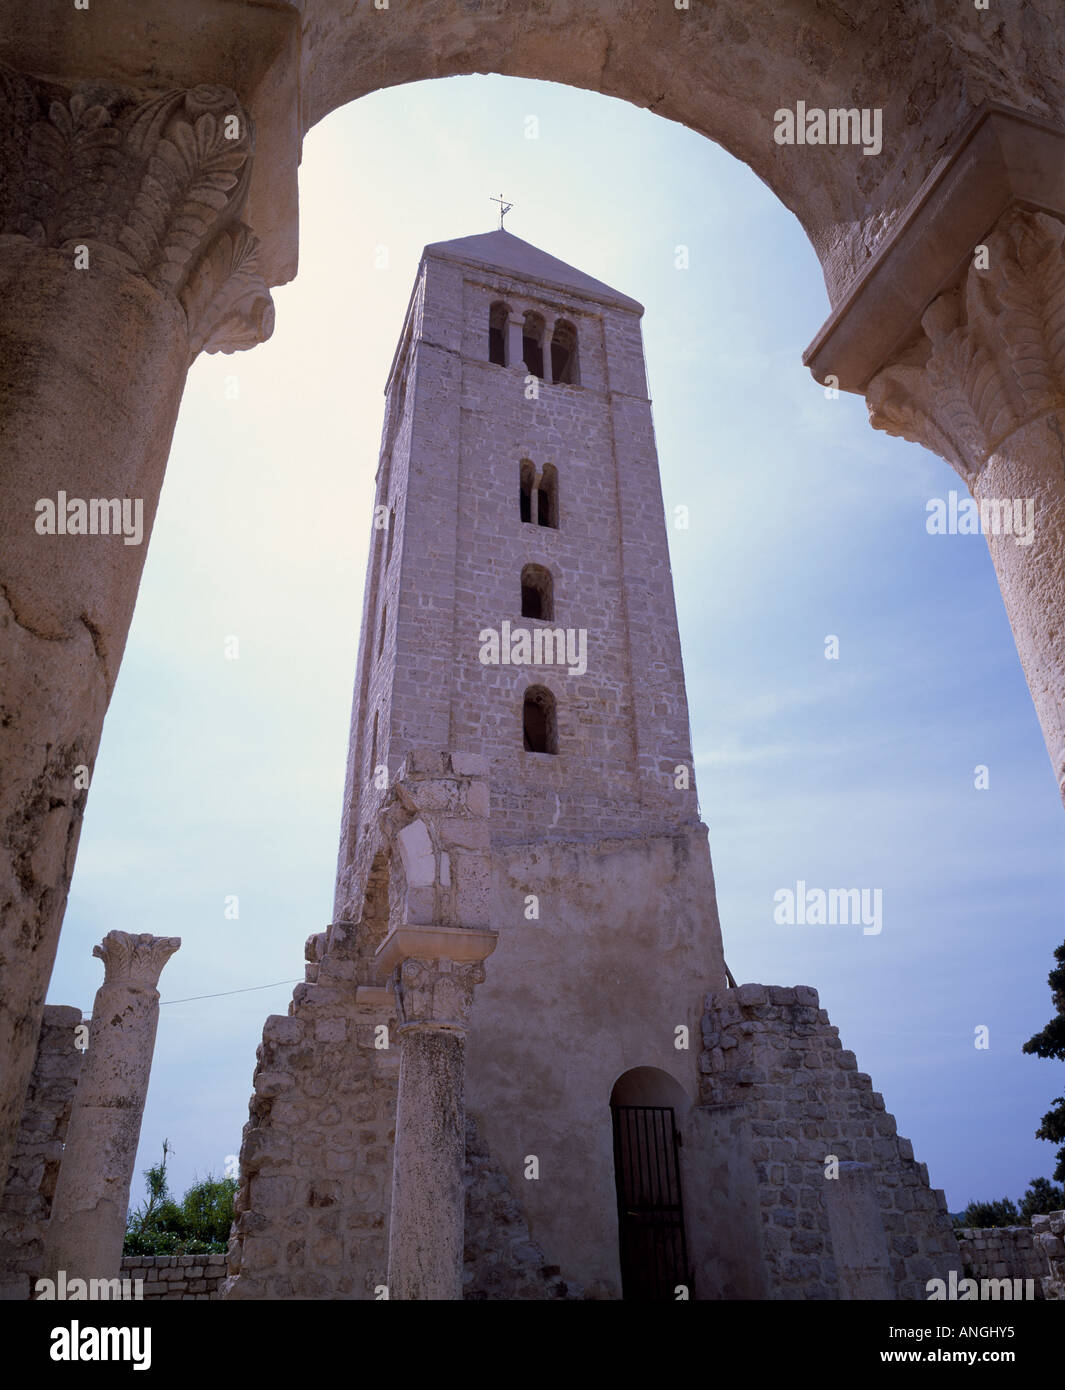 Campanile of the church of St John, or Sveti Ivan, Rab town, Rab Island, Kvarner region, Croatia Stock Photo